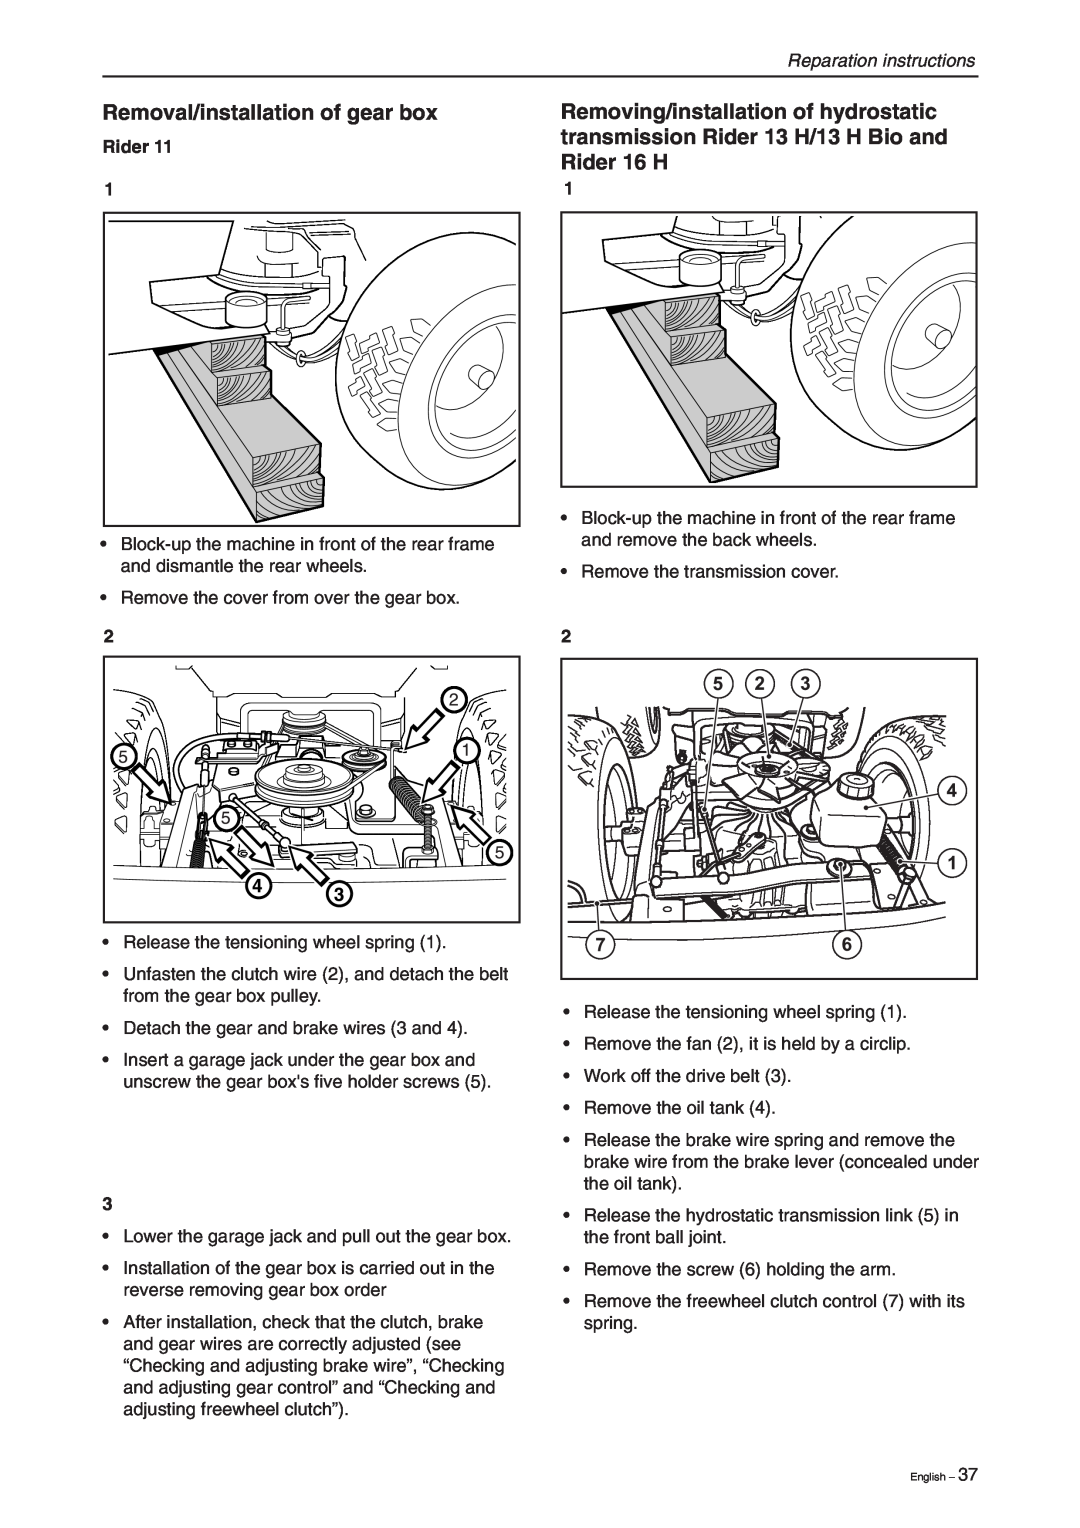 Briggs & Stratton RIDER 13, RIDER 11 BIO, RIDER 16 manual Removal/installation of gear box, Reparation instructions, Rider 